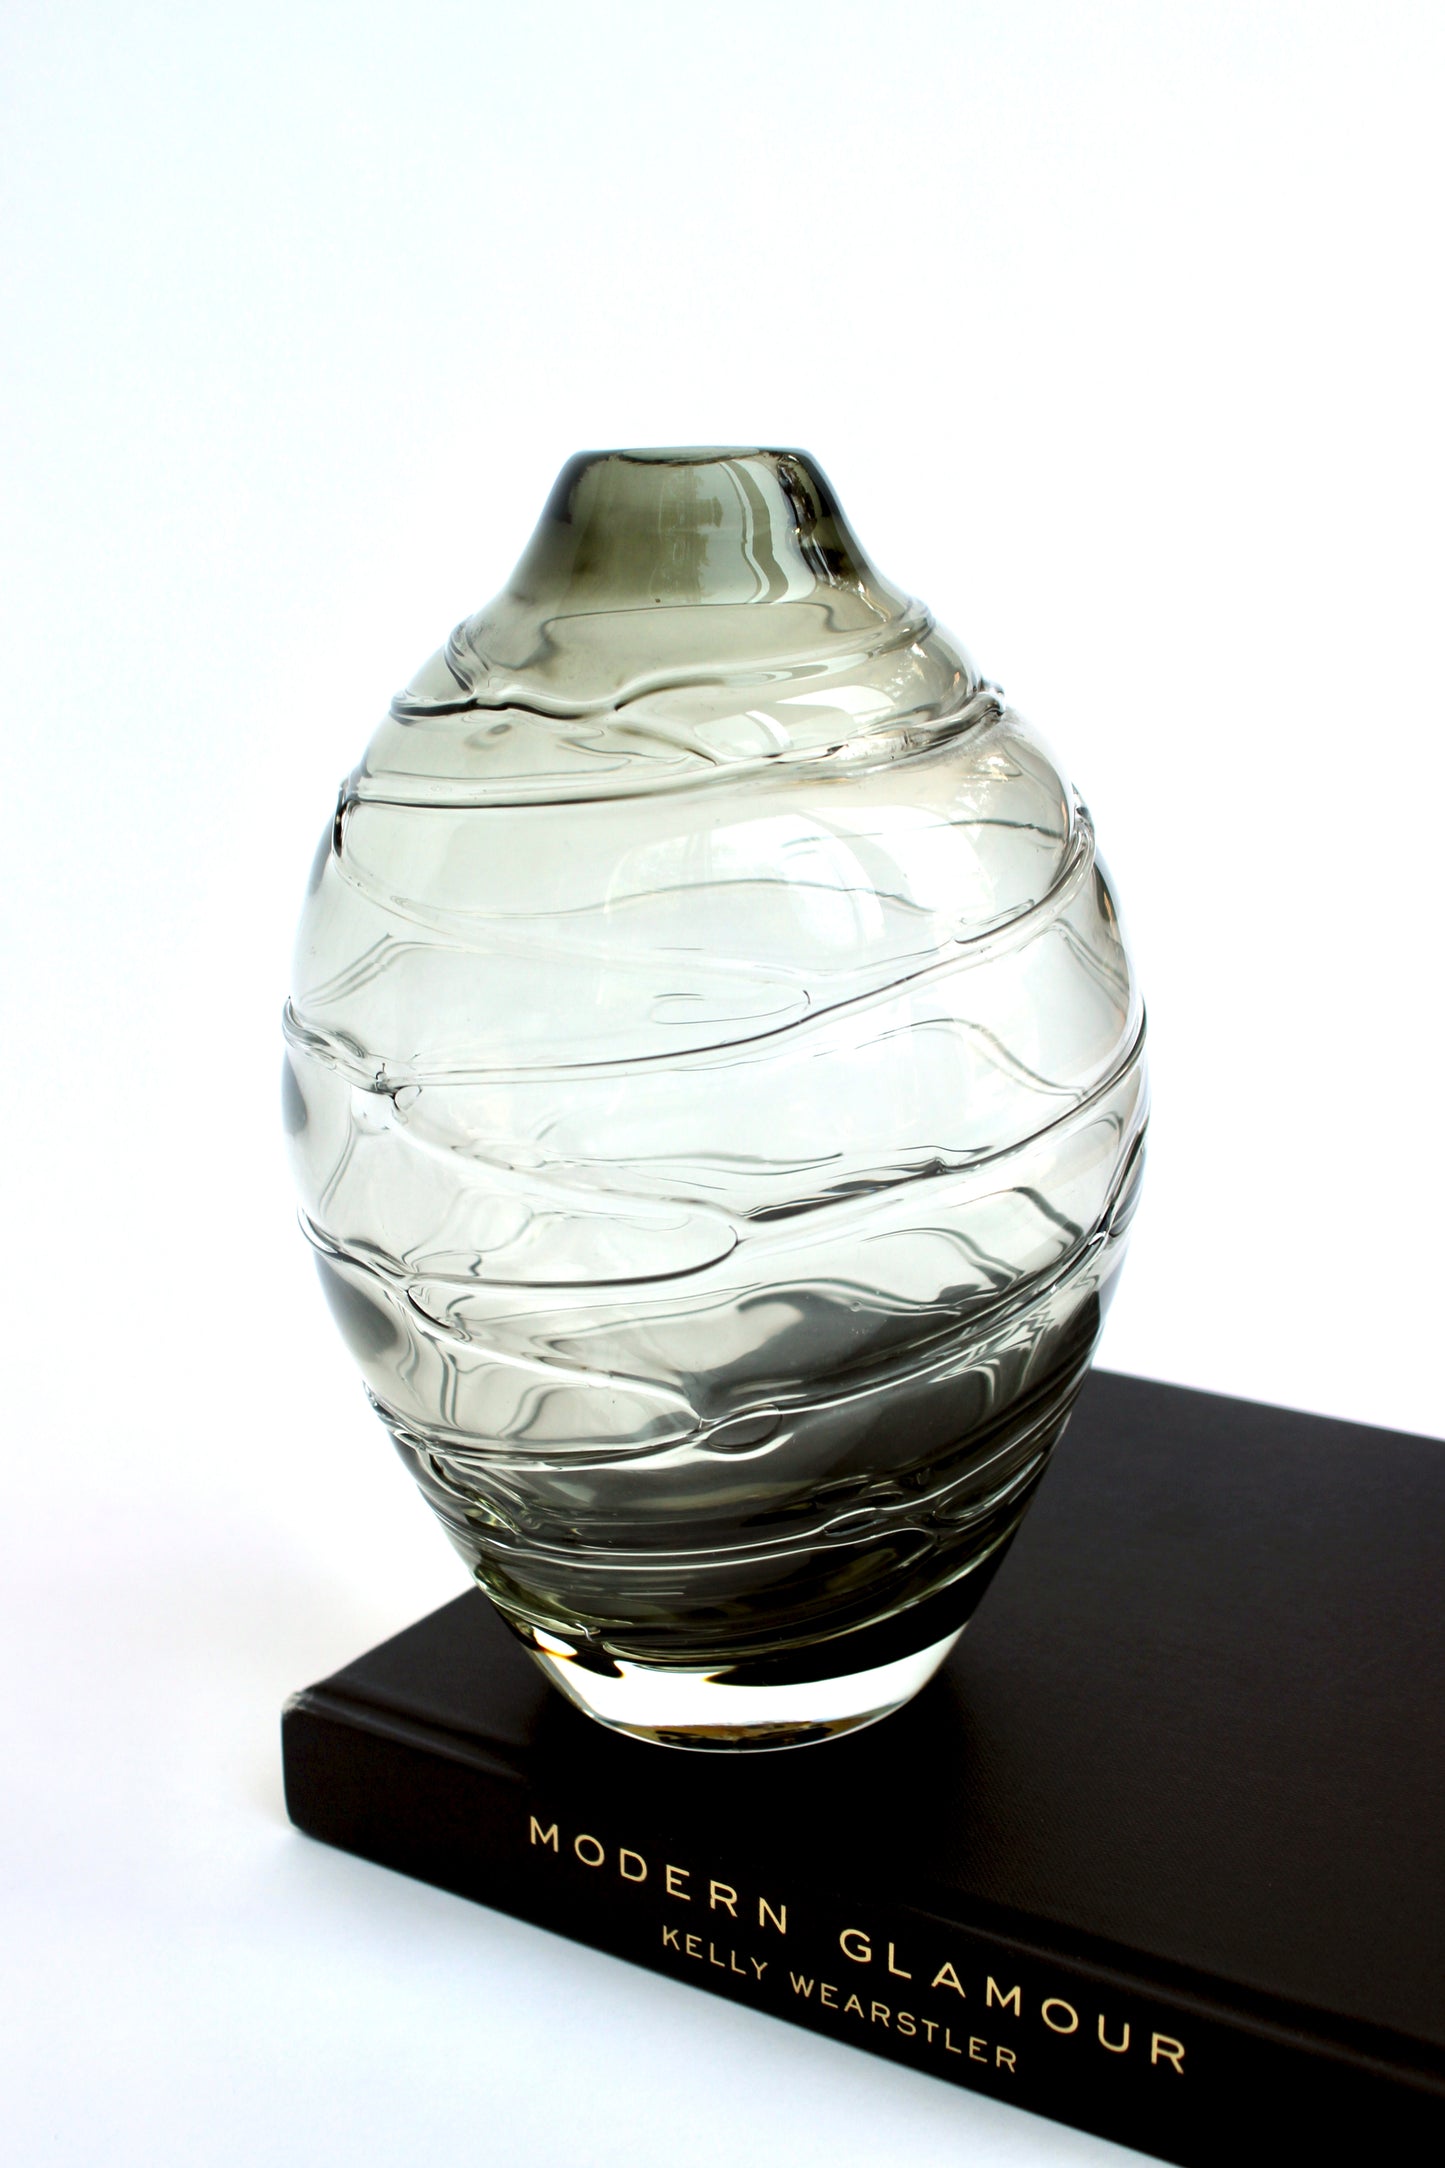 wavy line smoke glass vase